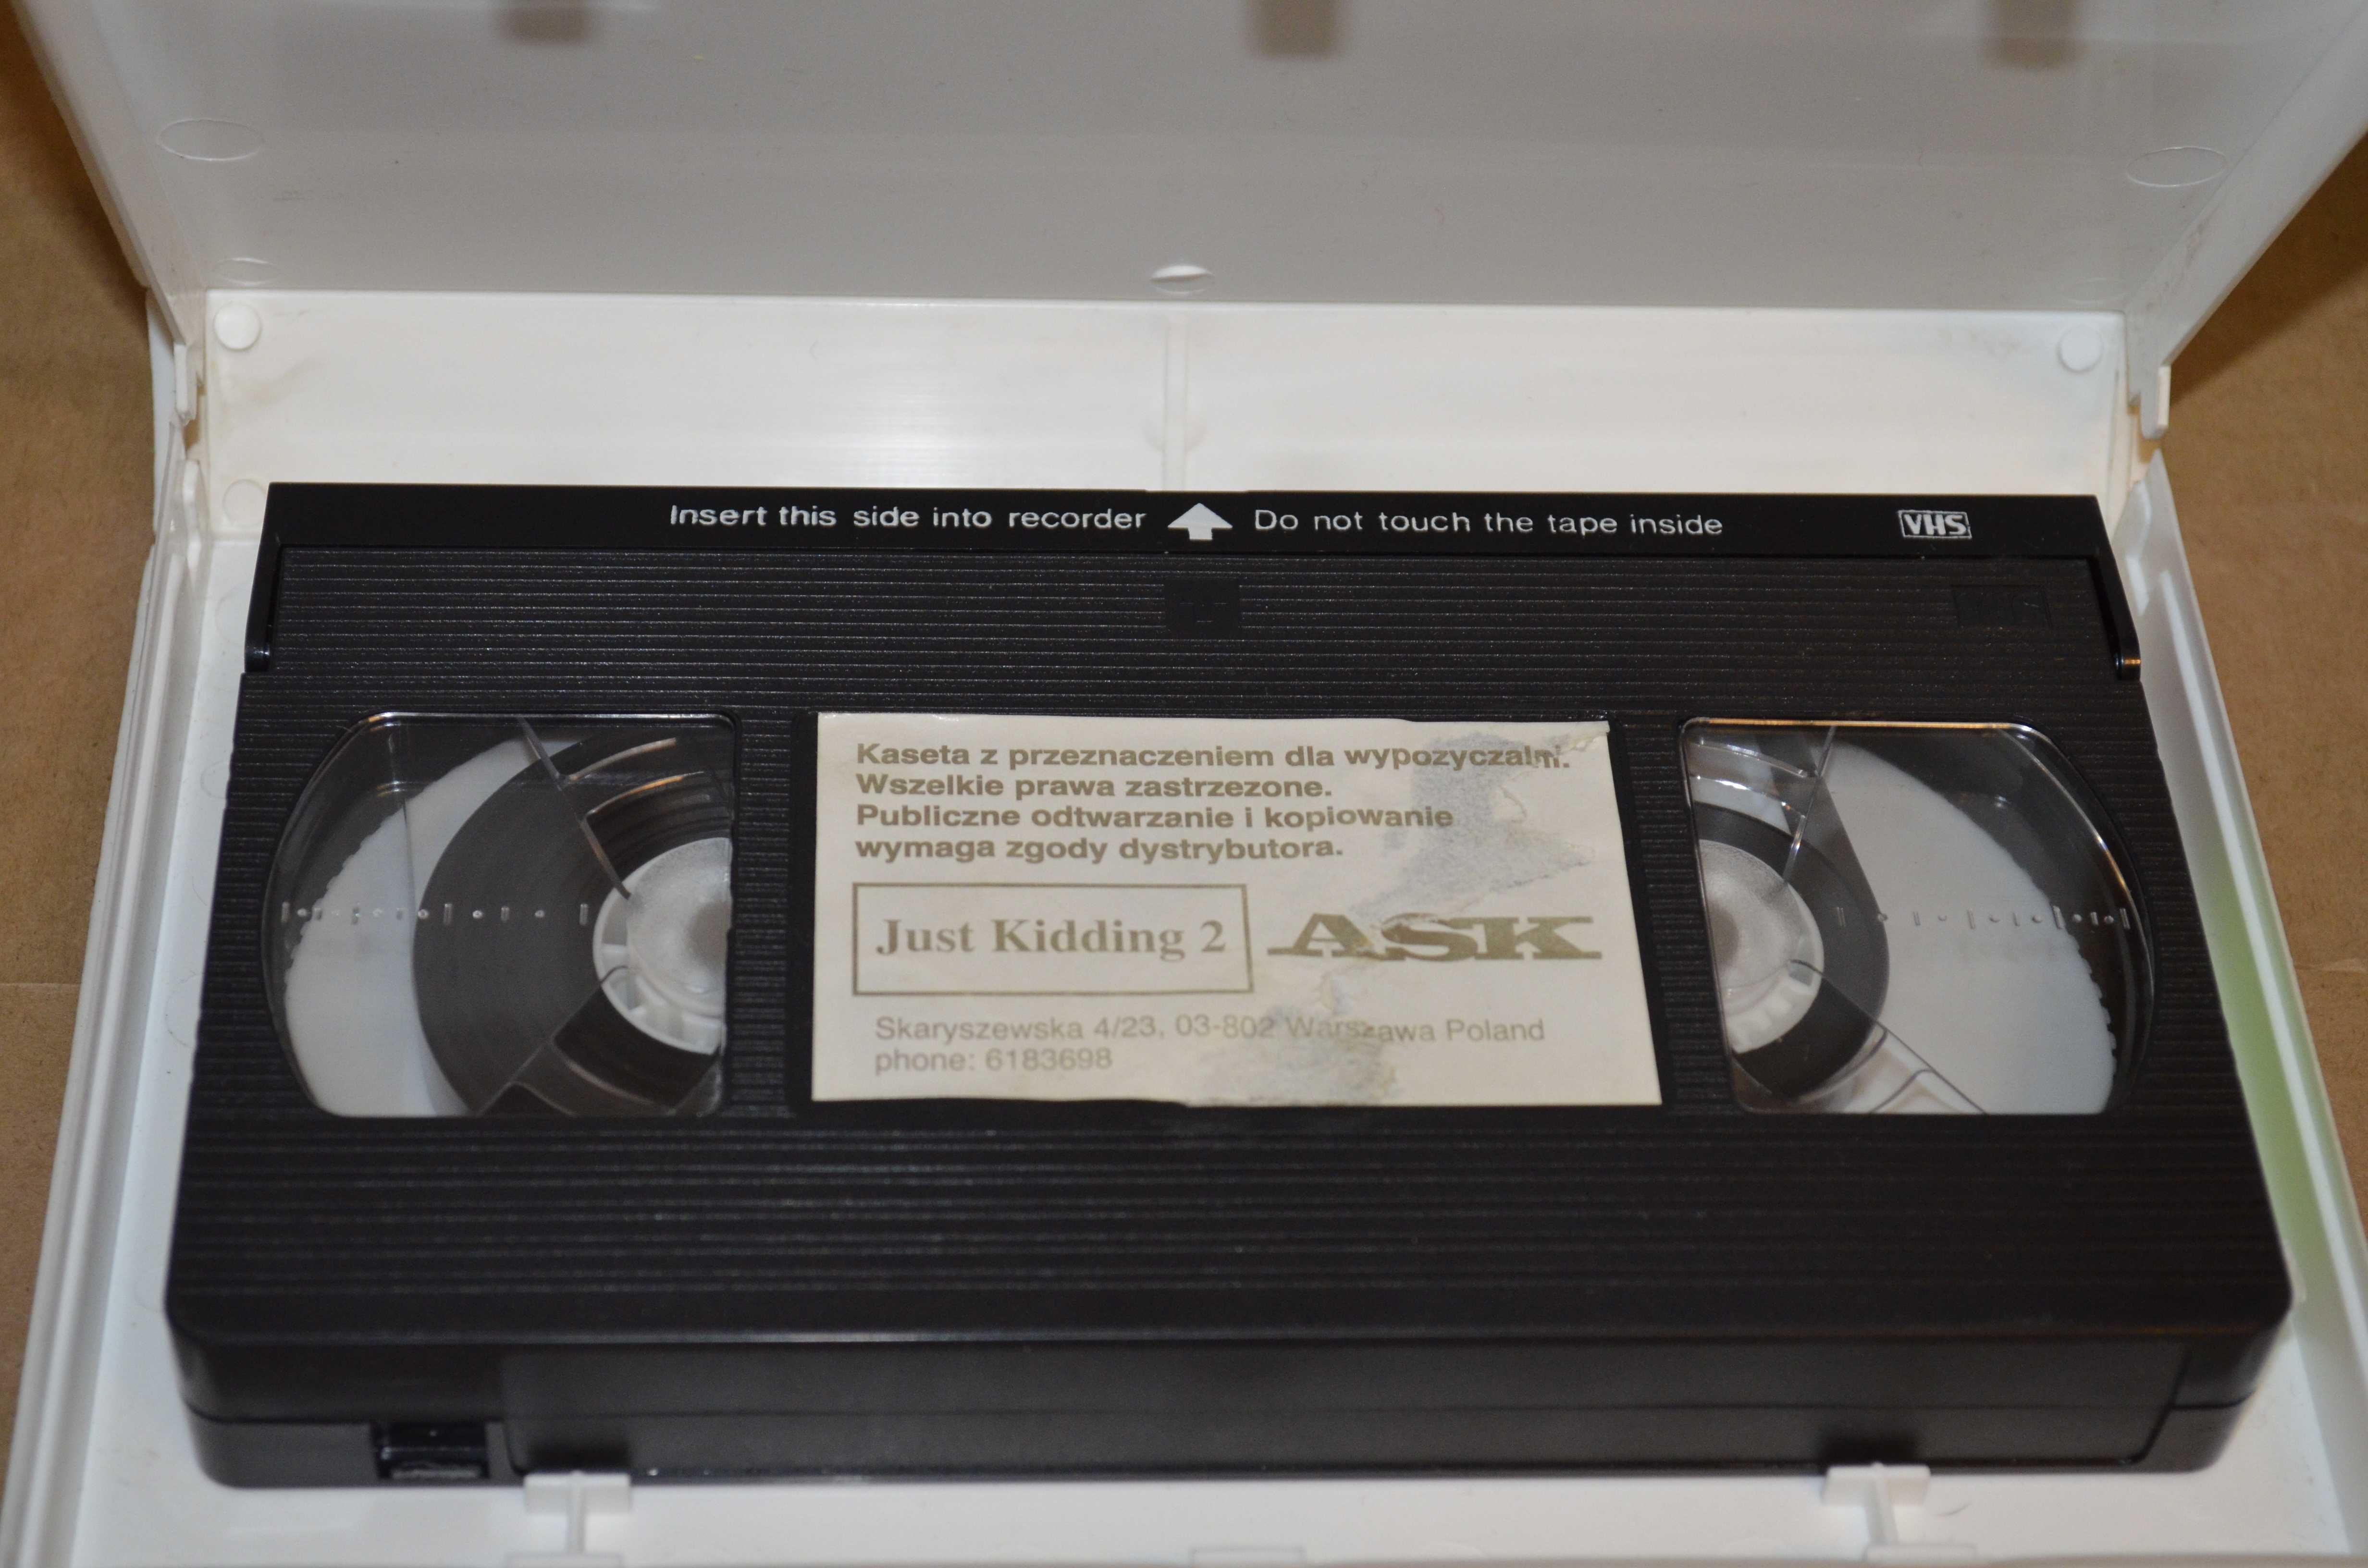 Wolne żarty 2 - VHS kaseta video